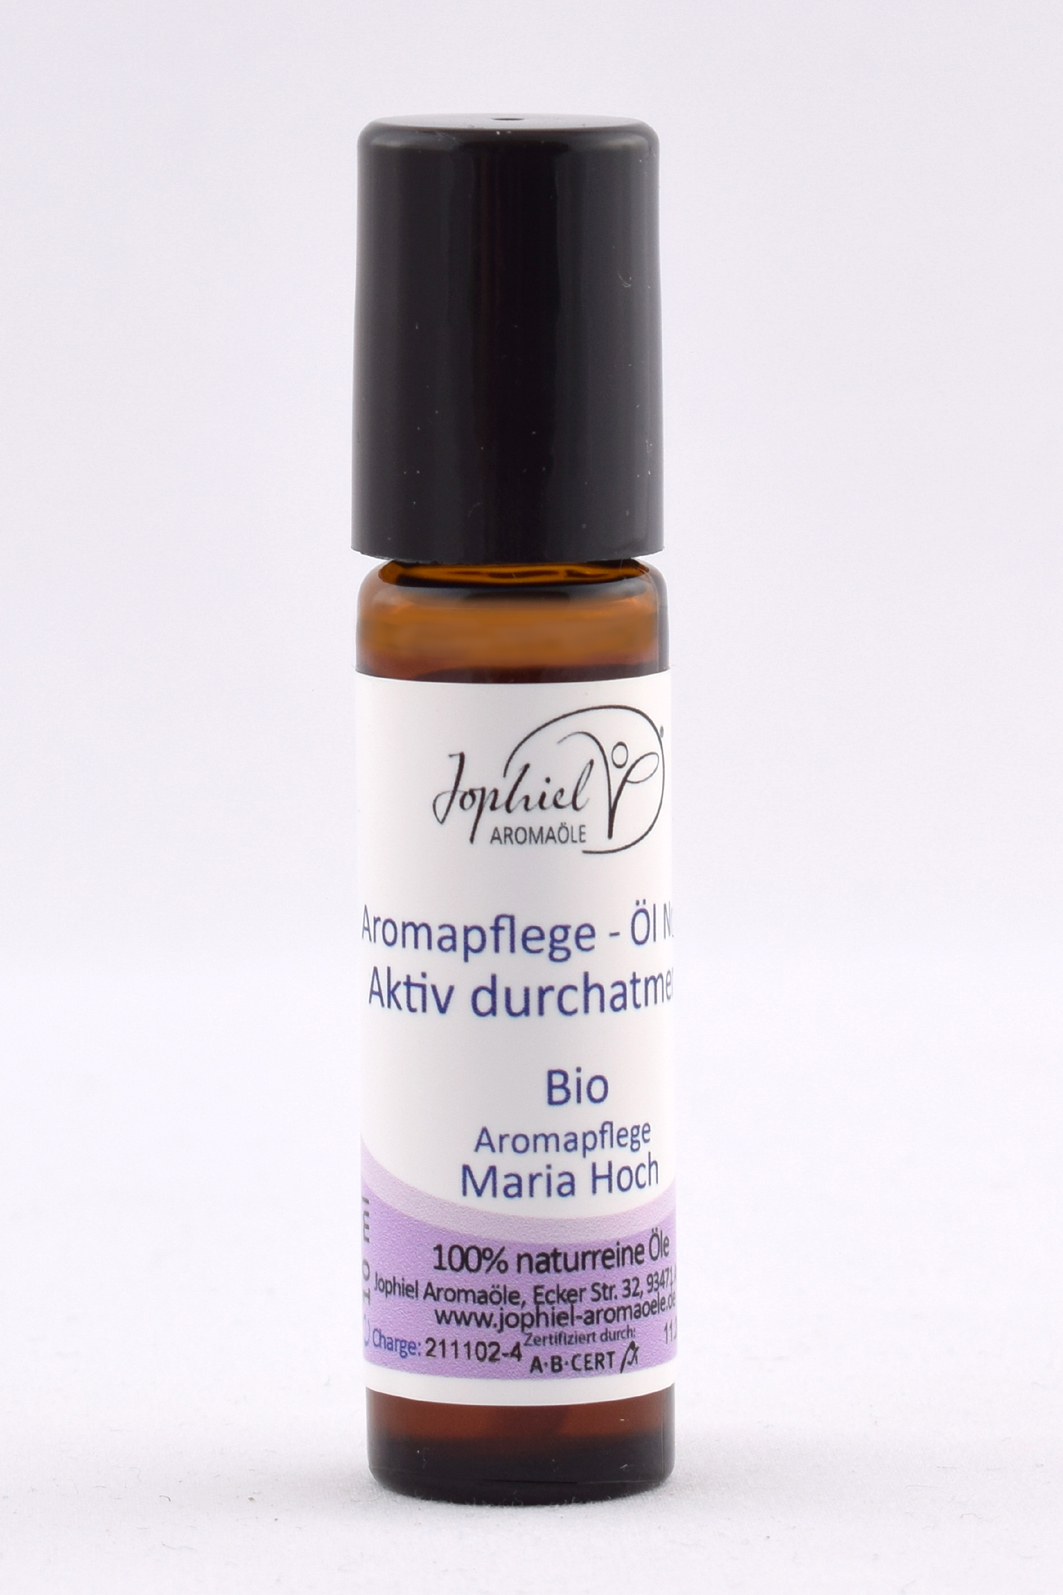 Aromapflege-Öl Nr. 04 Aktiv durchatmen im Roll-on Bio 10 ml  